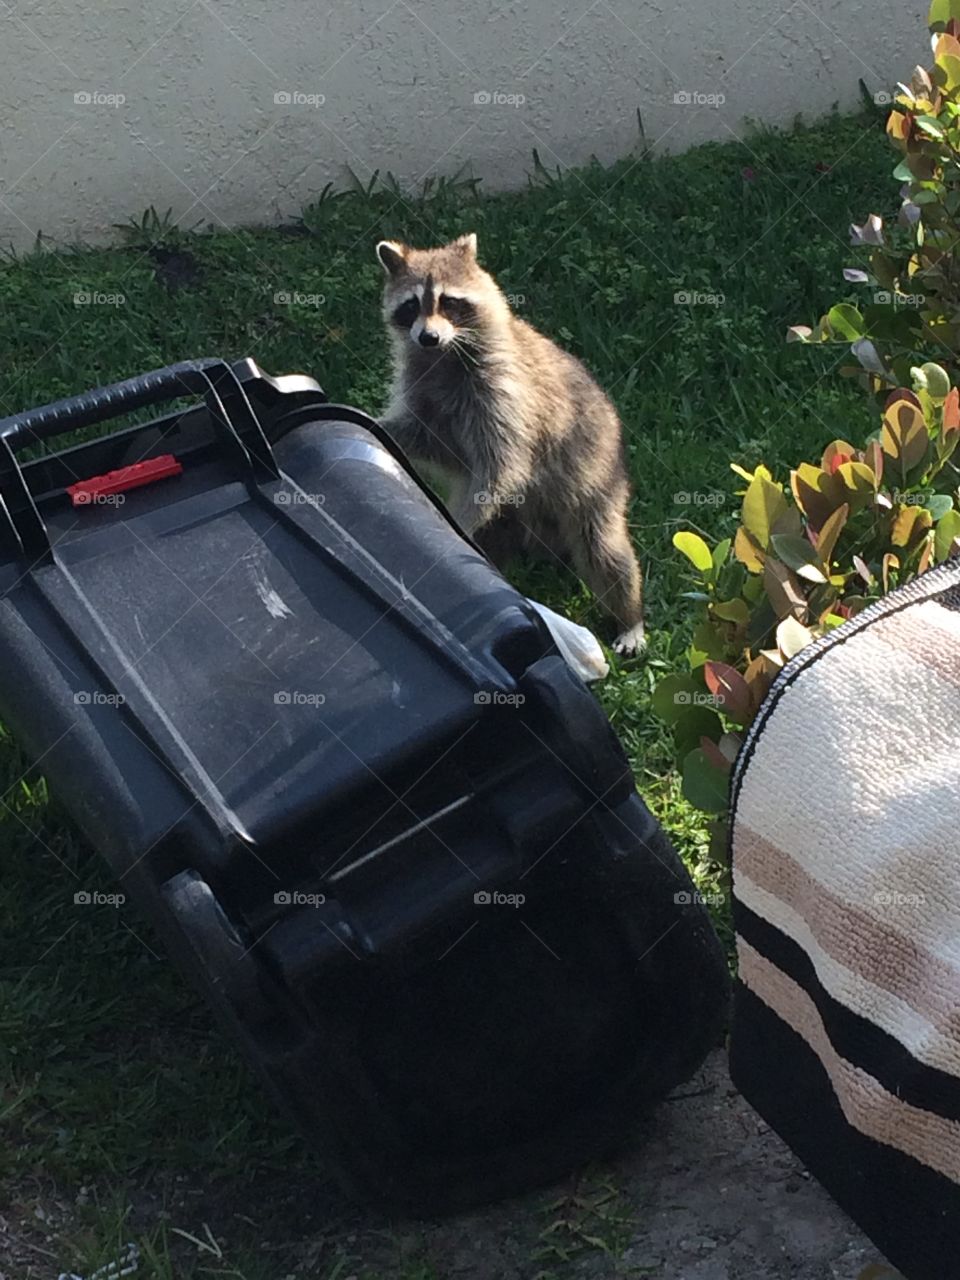 Raccoon Knocked Over The Garbage Bin Looking For Food